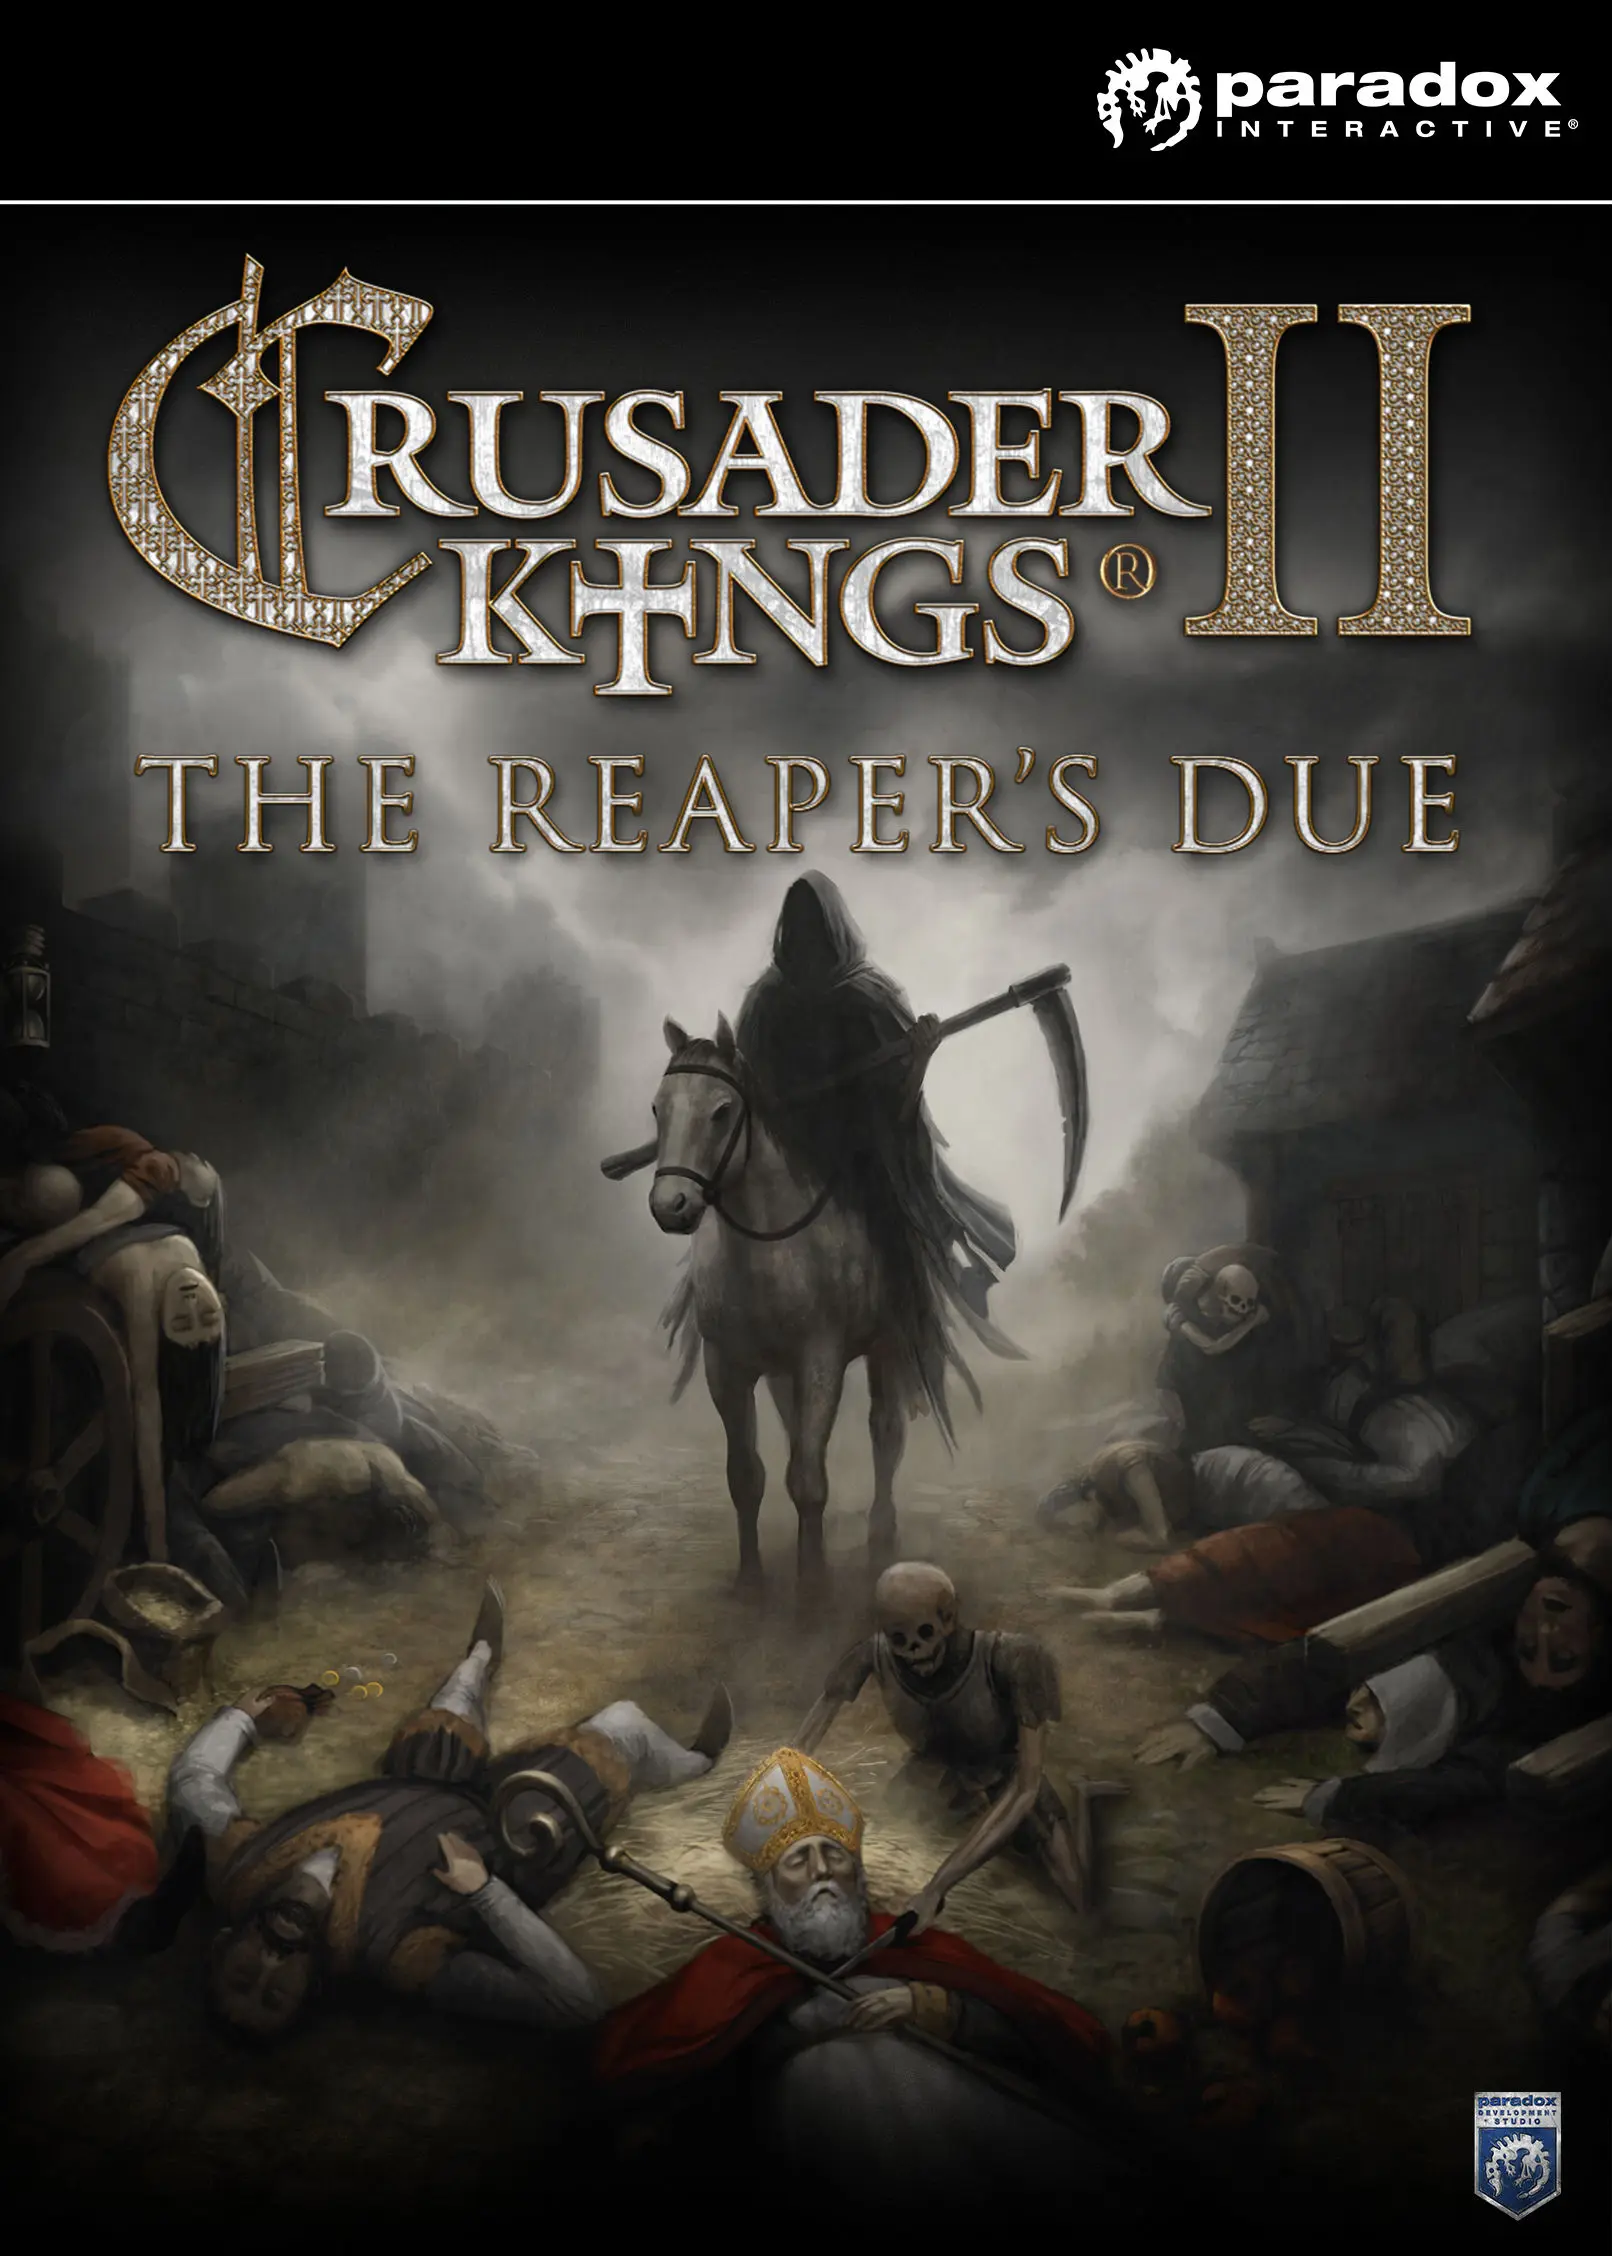 Crusader Kings II - The Reaper's Due DLC (PC / Mac / Linux) - Steam - Digital Code